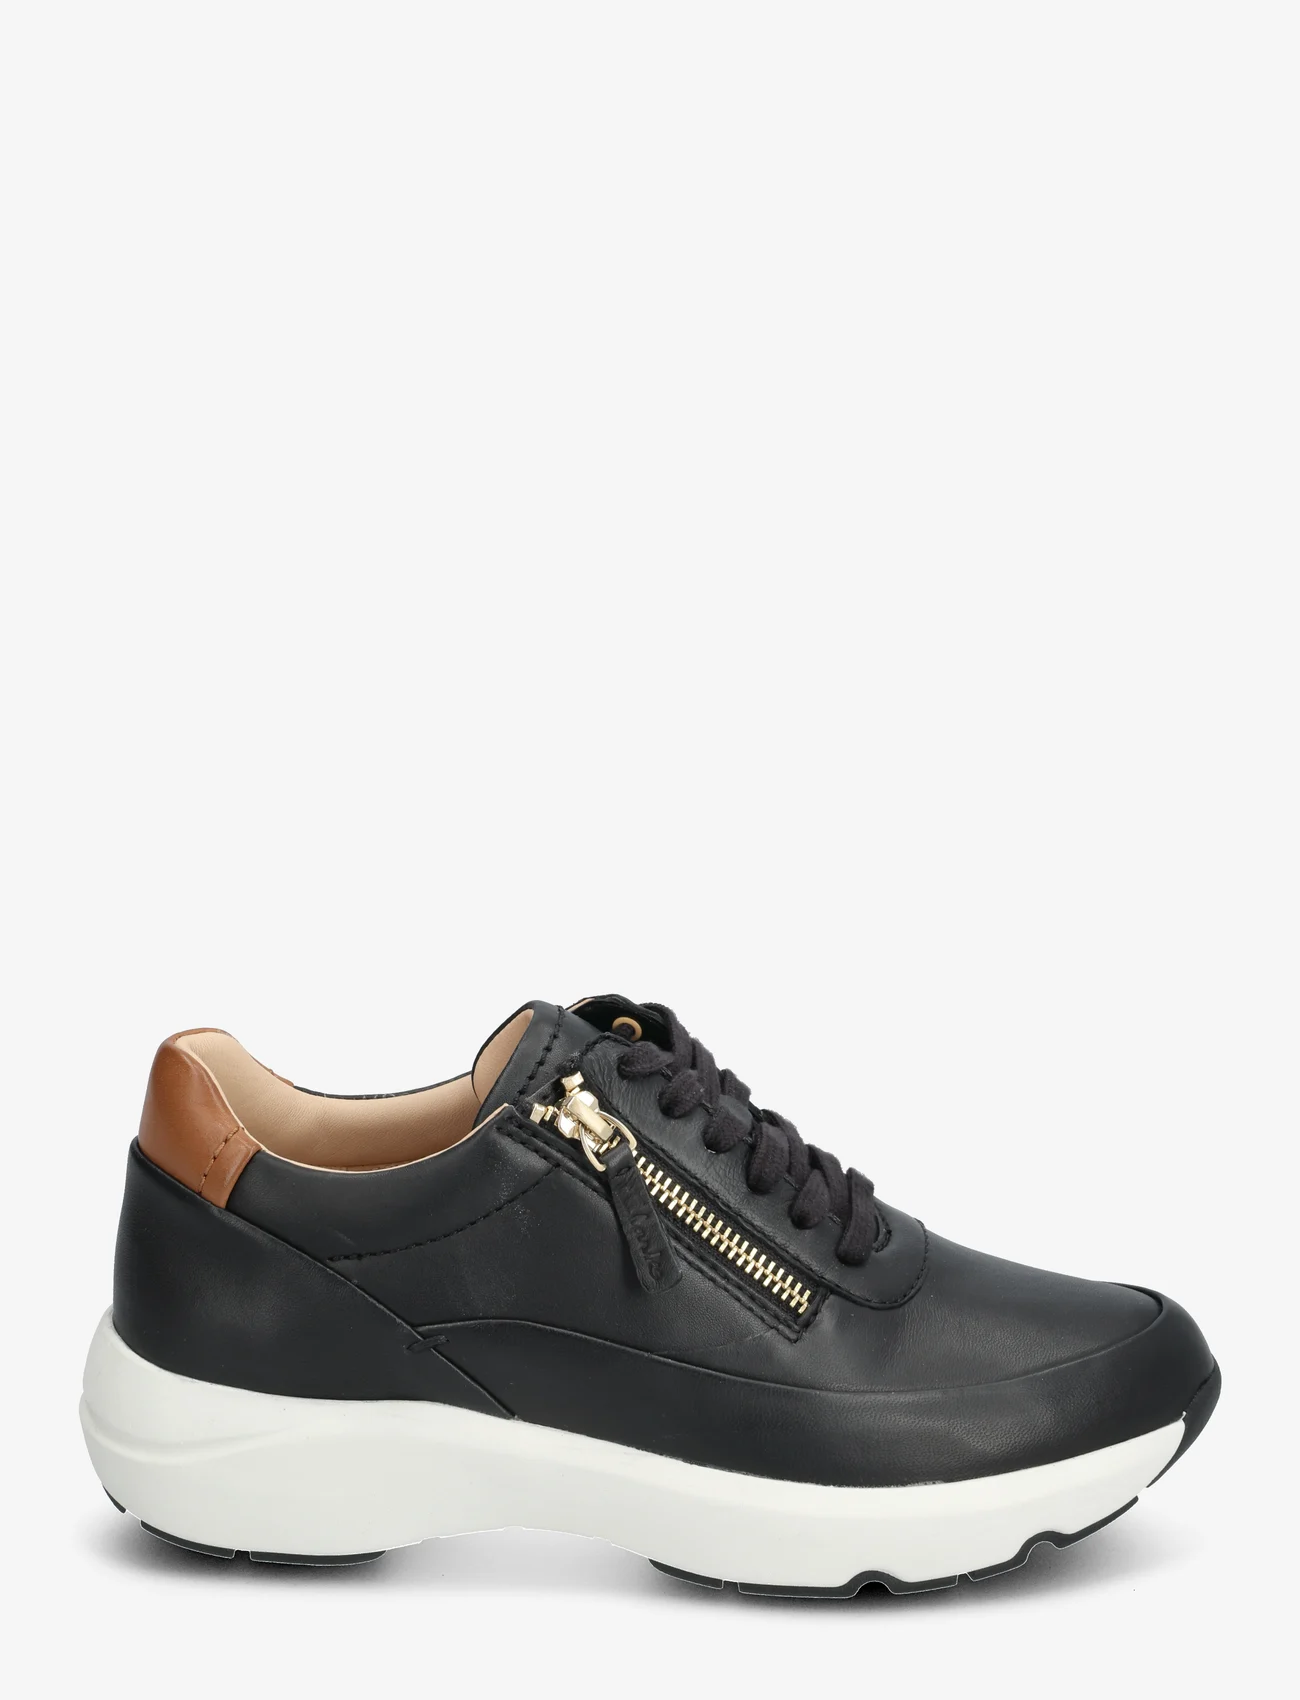 Clarks - Tivoli Zip D - lage sneakers - 1216 black leather - 1